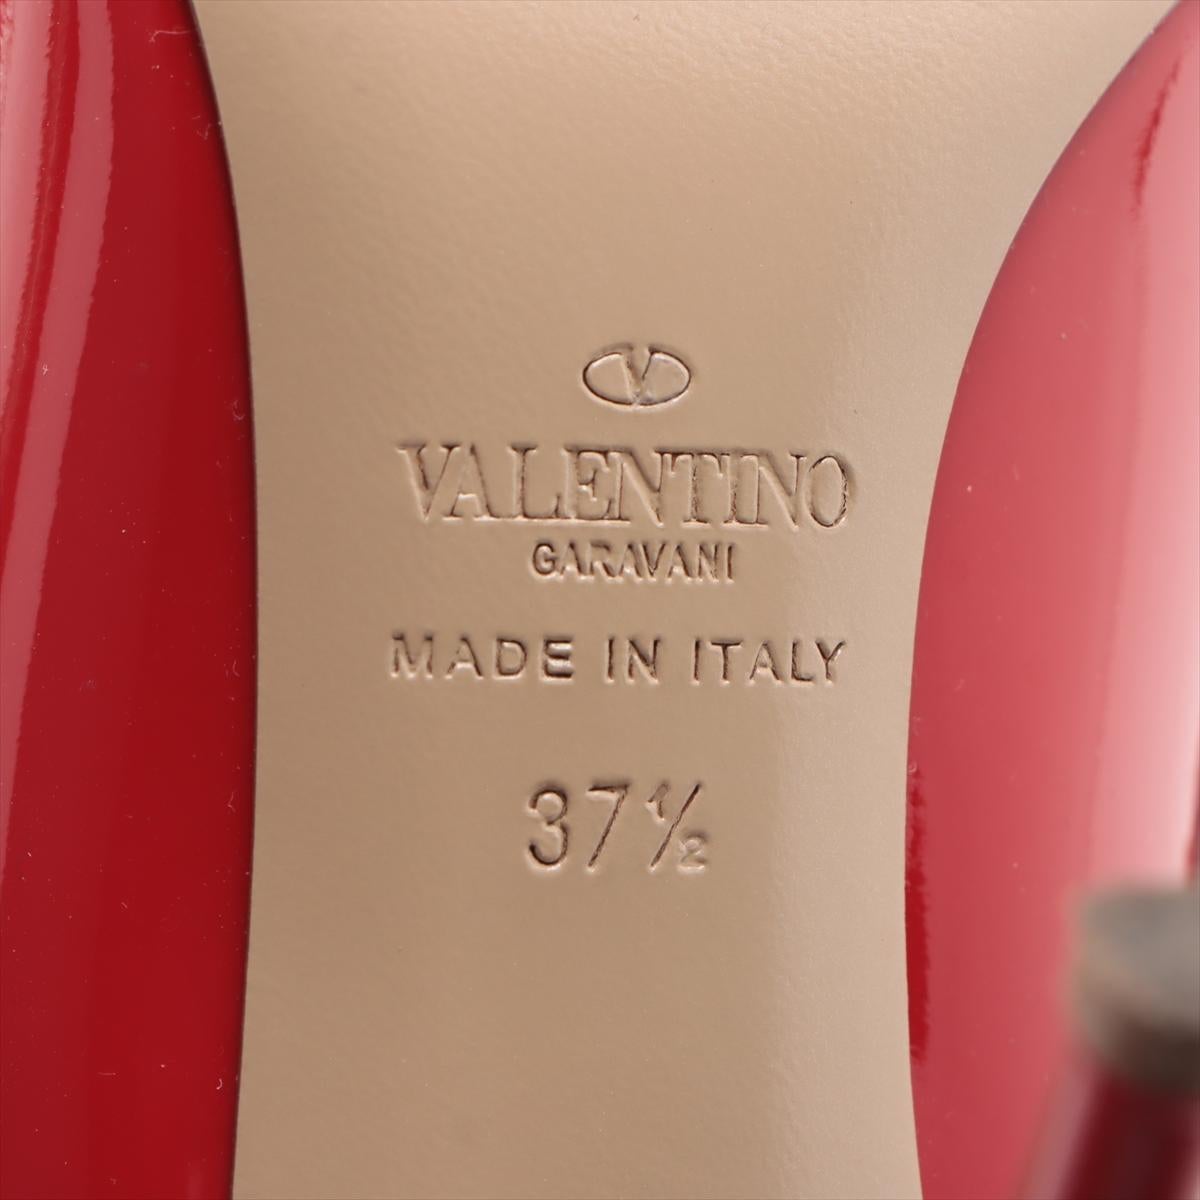 Valentino Garavani Rockstud Pointed-toe Patent Leather Pump Red 6